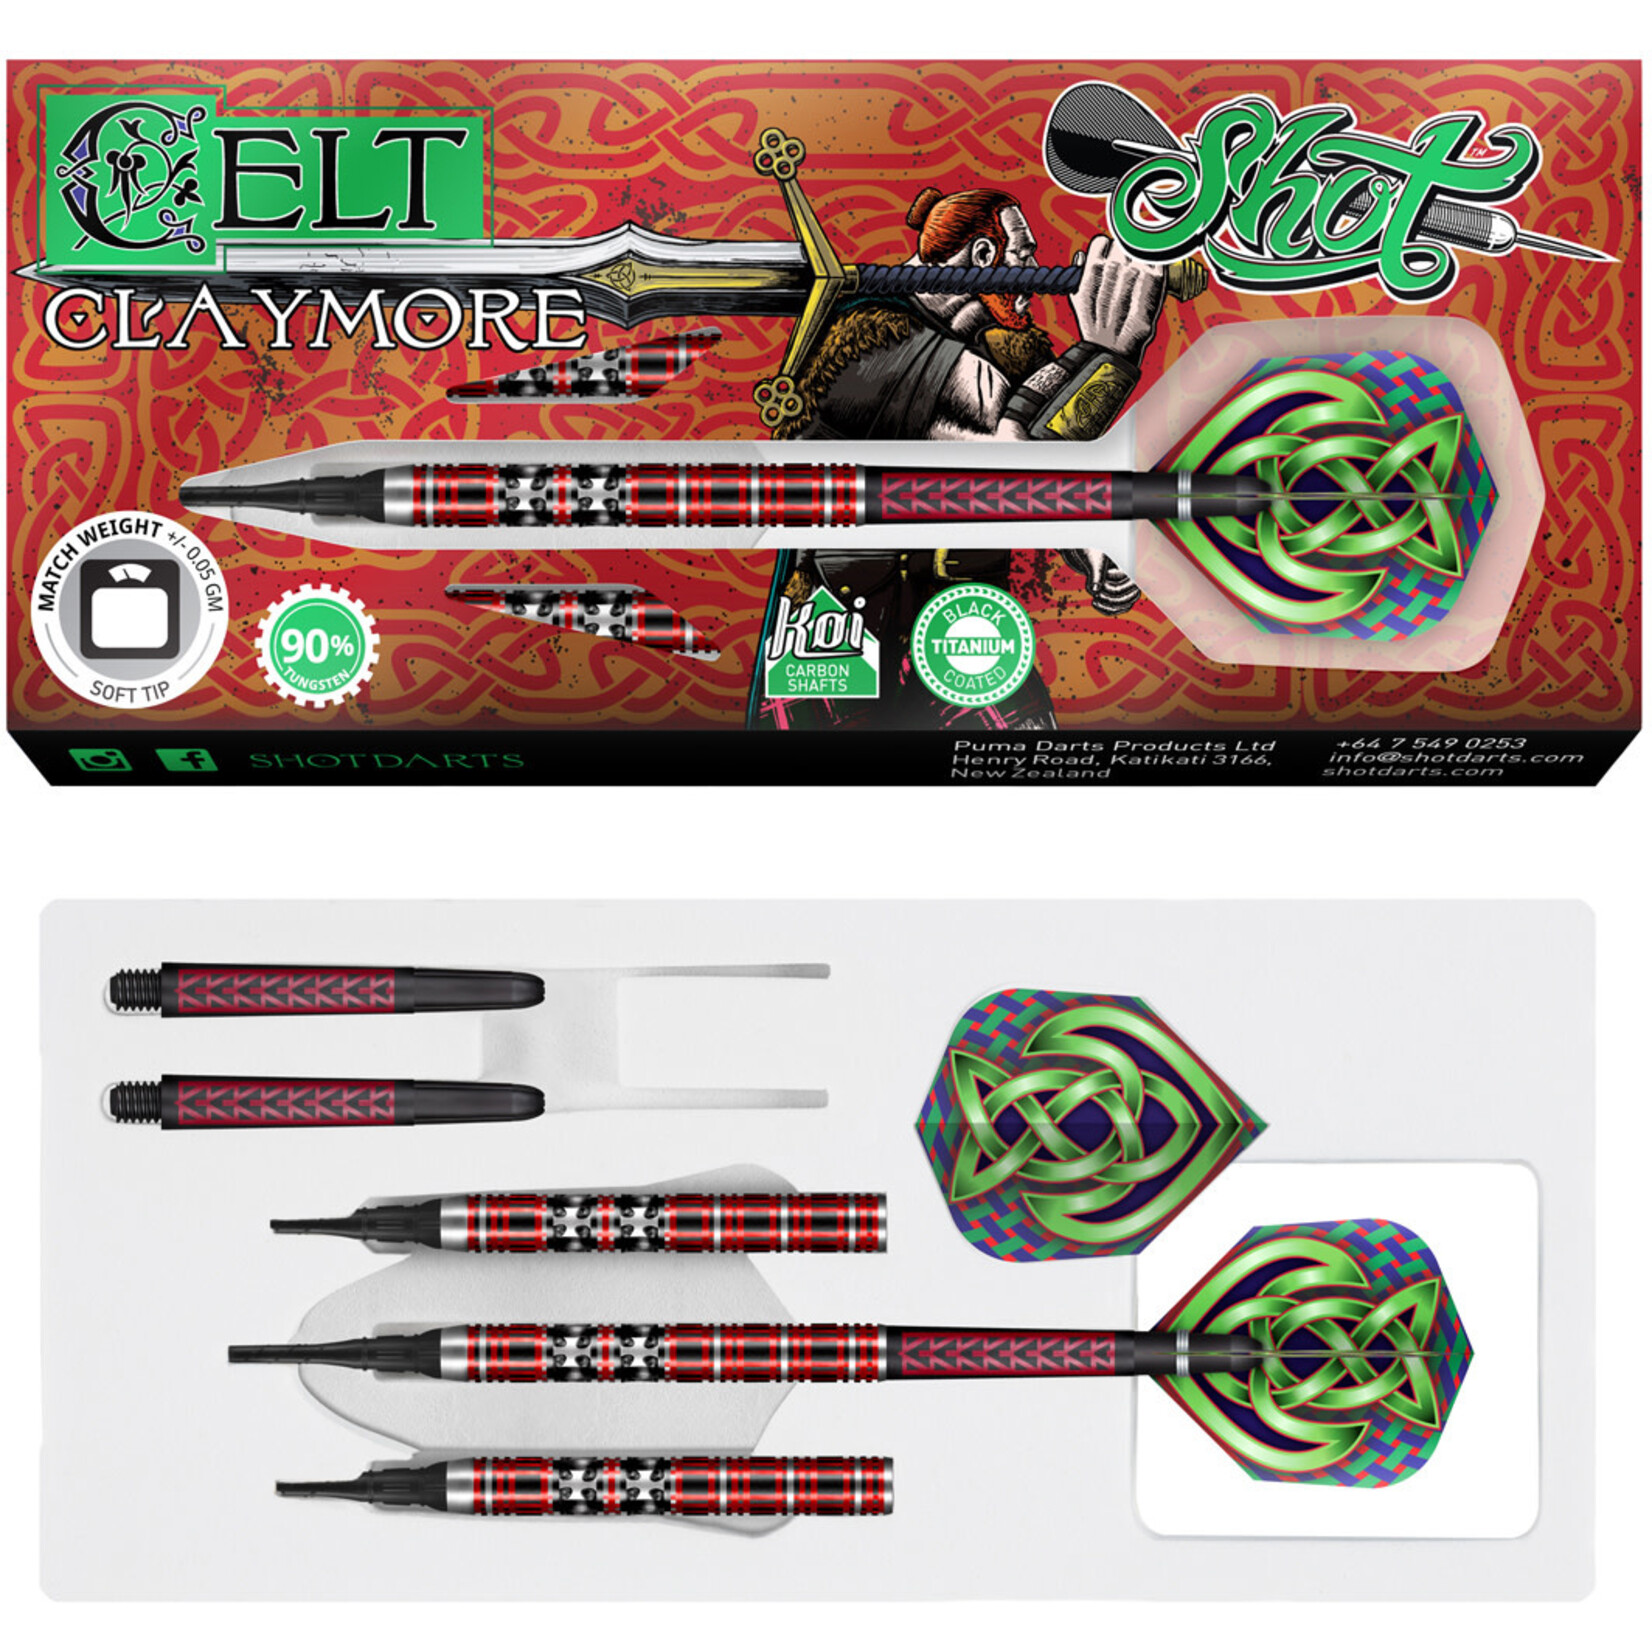 SHOT DARTS Celt Claymore Soft Tip Dart Set 18gm